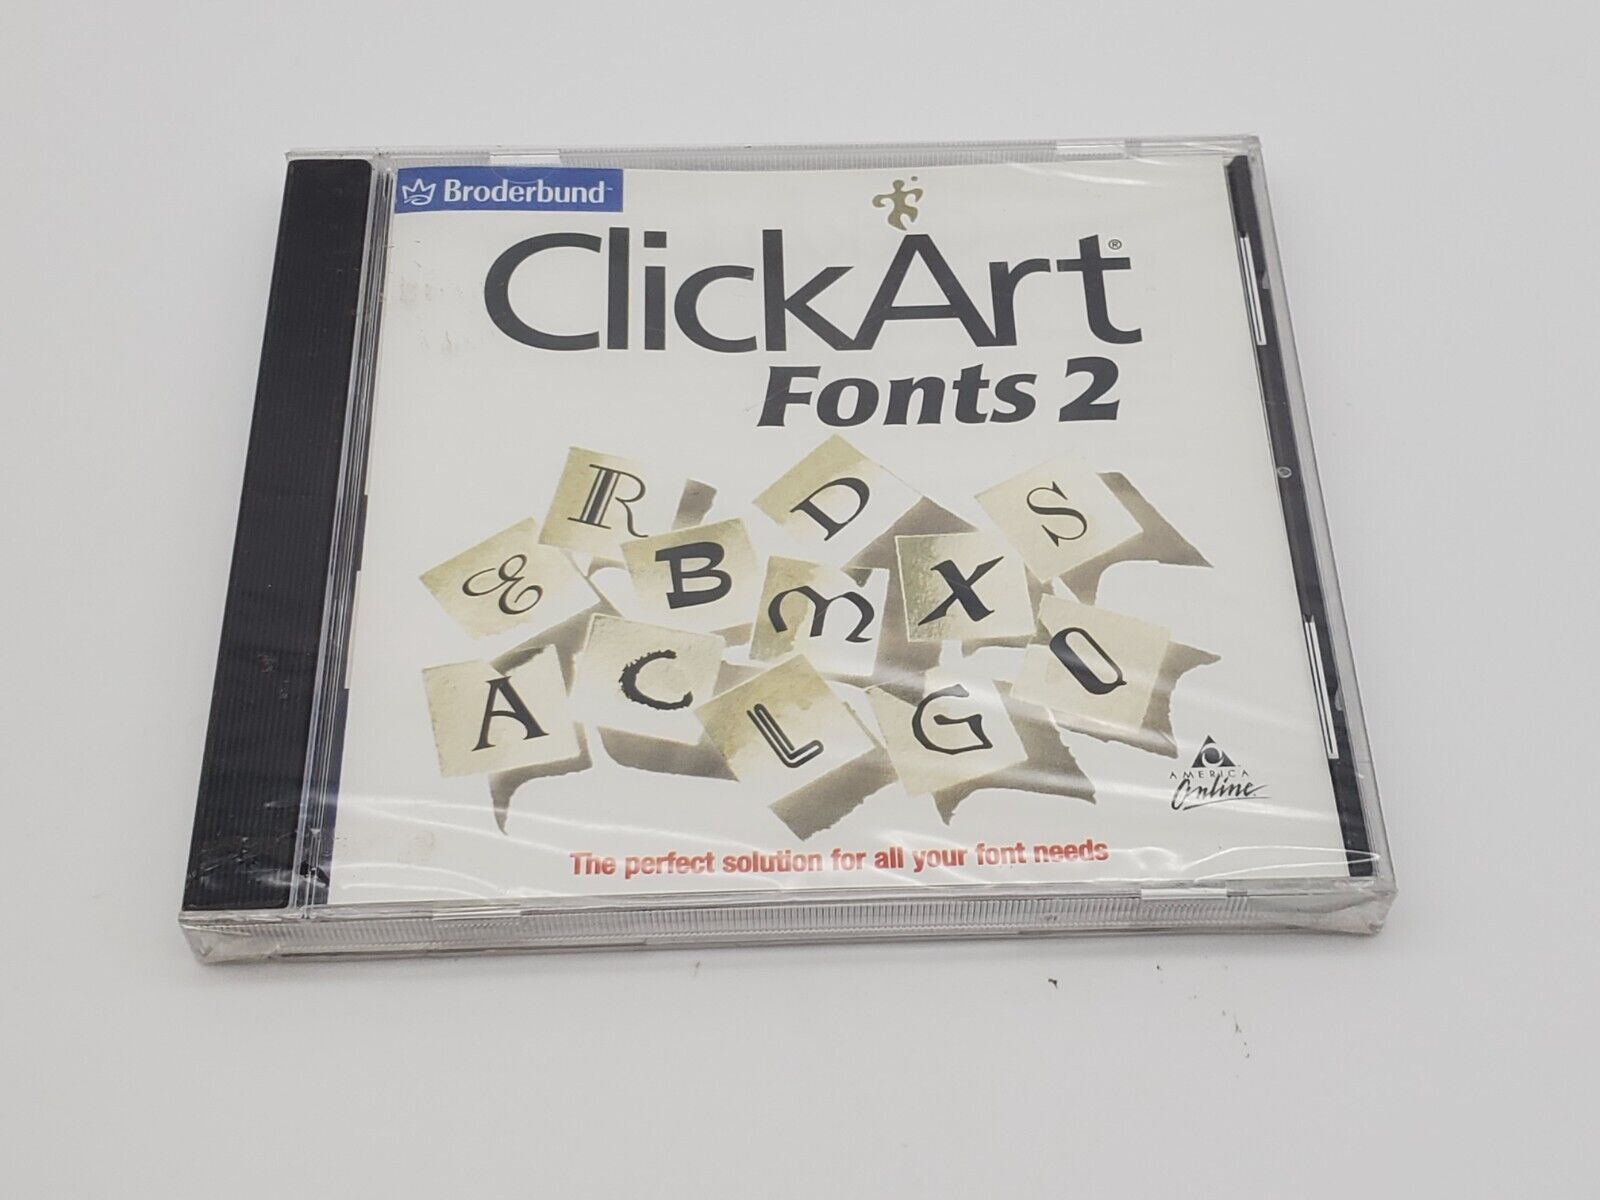 ClickArt Fonts 2 (Jewel Case) - Broderbund - New